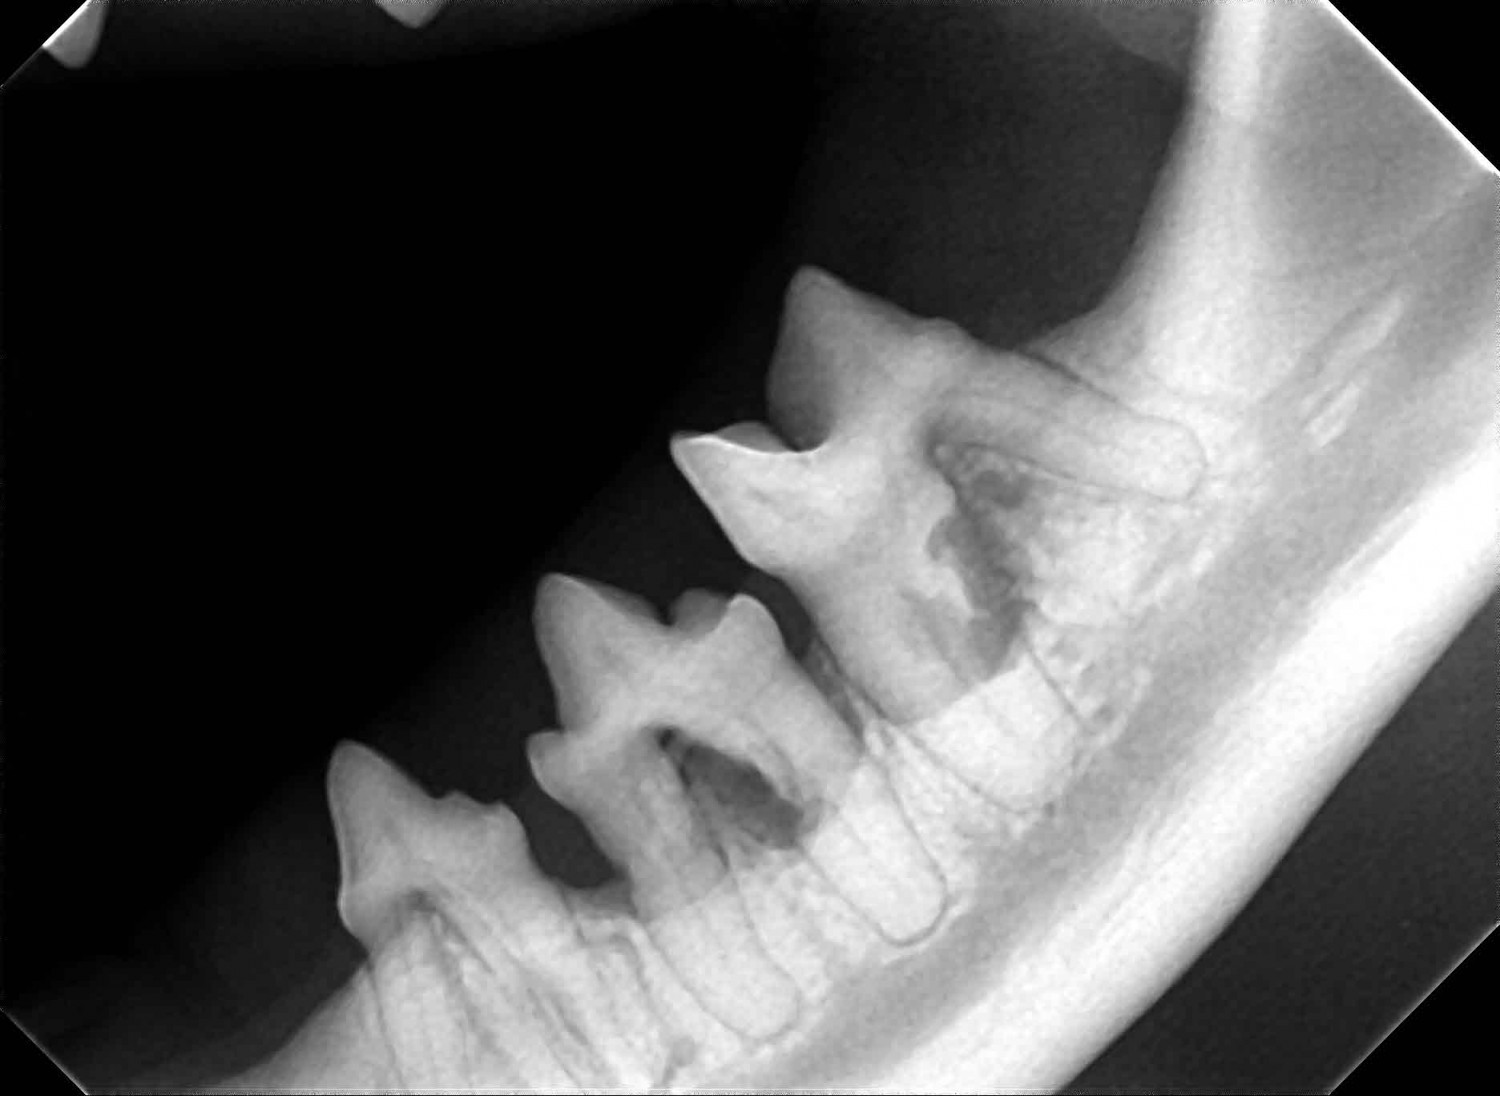  Feline internal resorption of the 3rd and 4th mandibular pre-molar and molar tooth